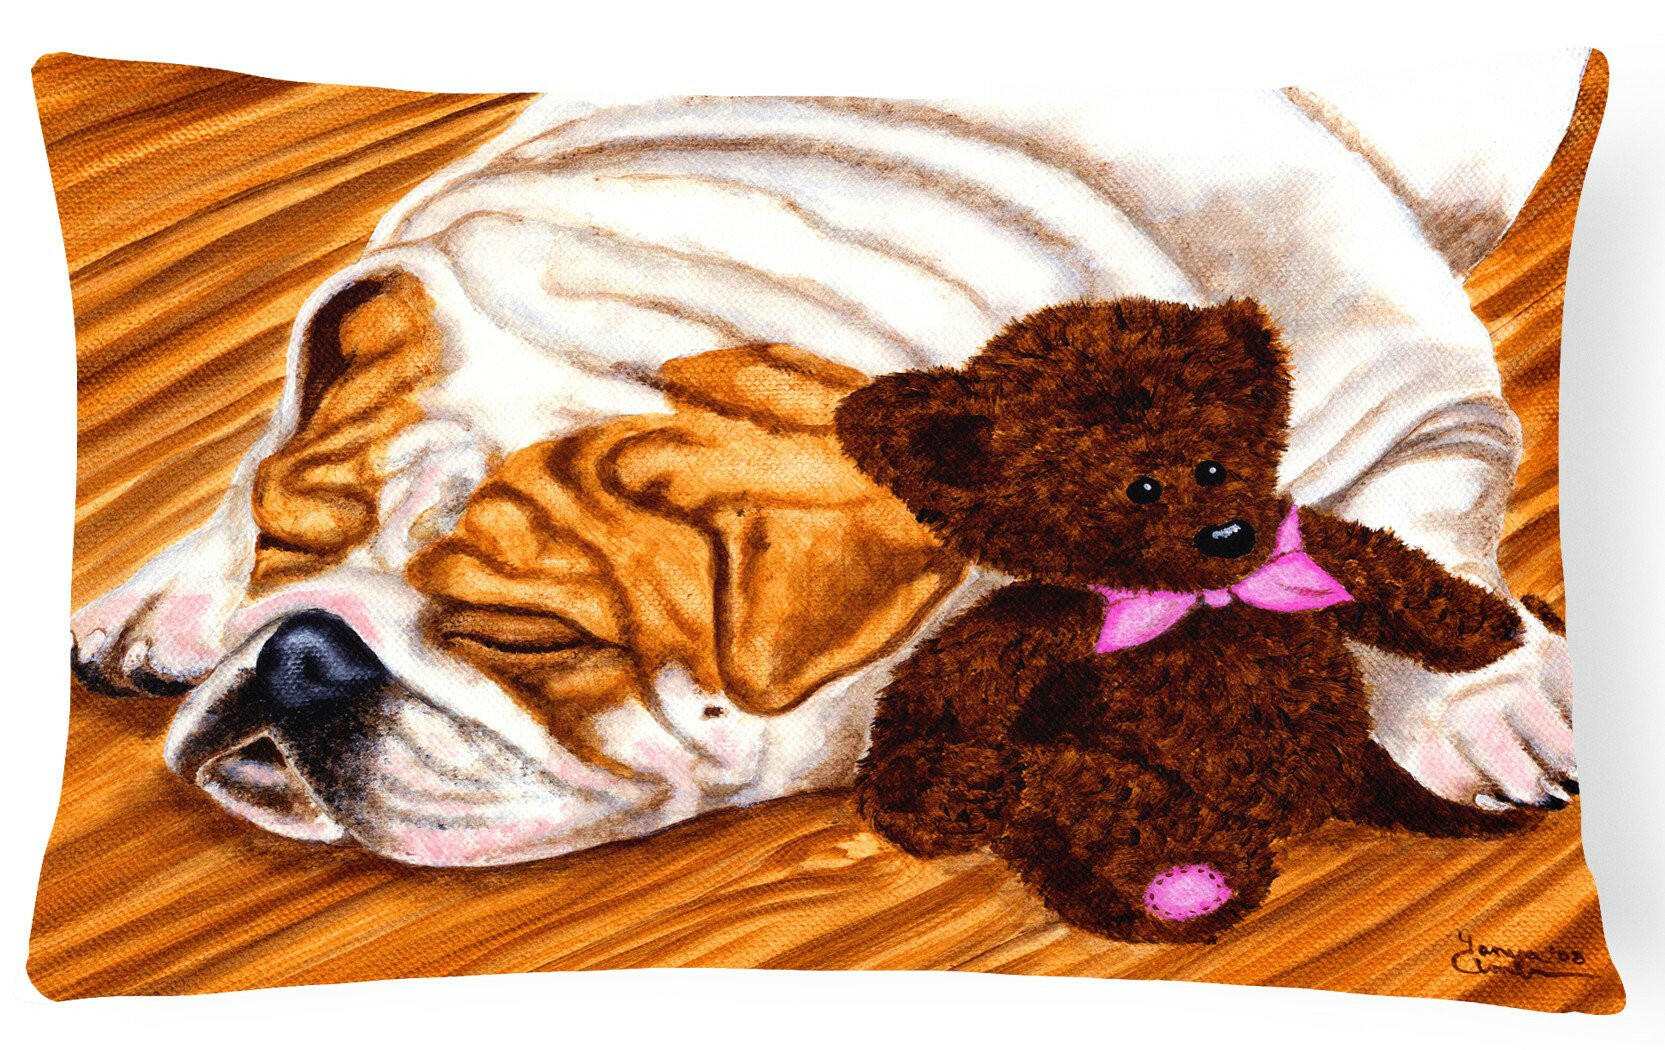 English Bulldog and Teddy Bear Fabric Decorative Pillow AMB1003PW1216 by Caroline's Treasures